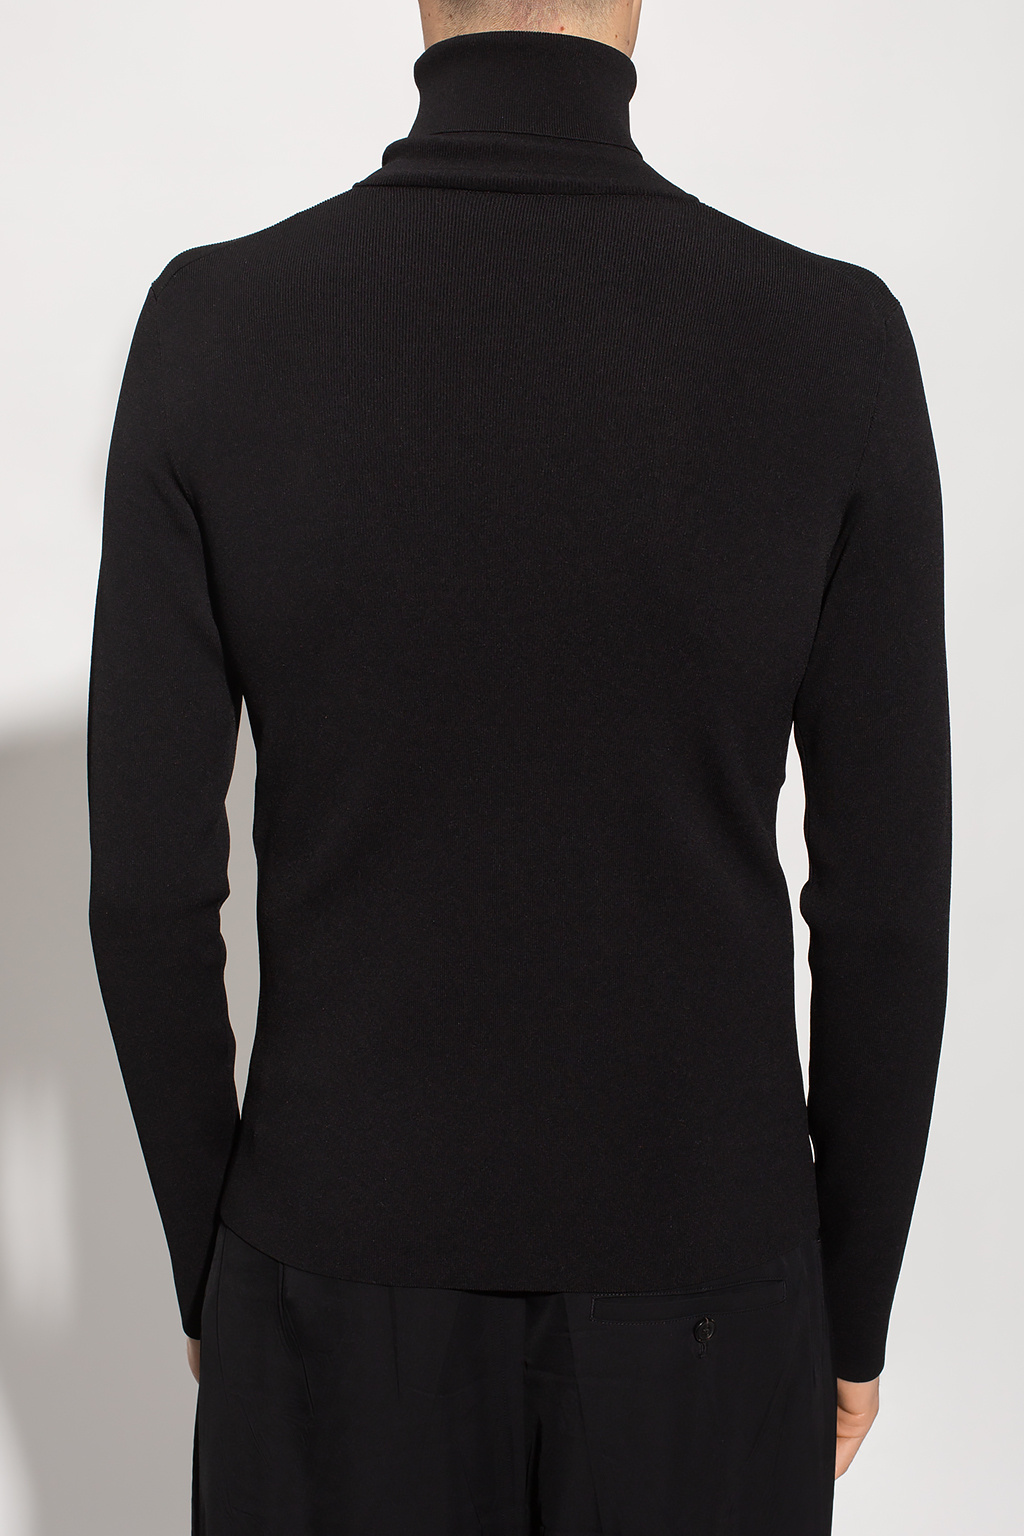 Black Turtleneck sweater with logo Balenciaga - Palm pattern shirt